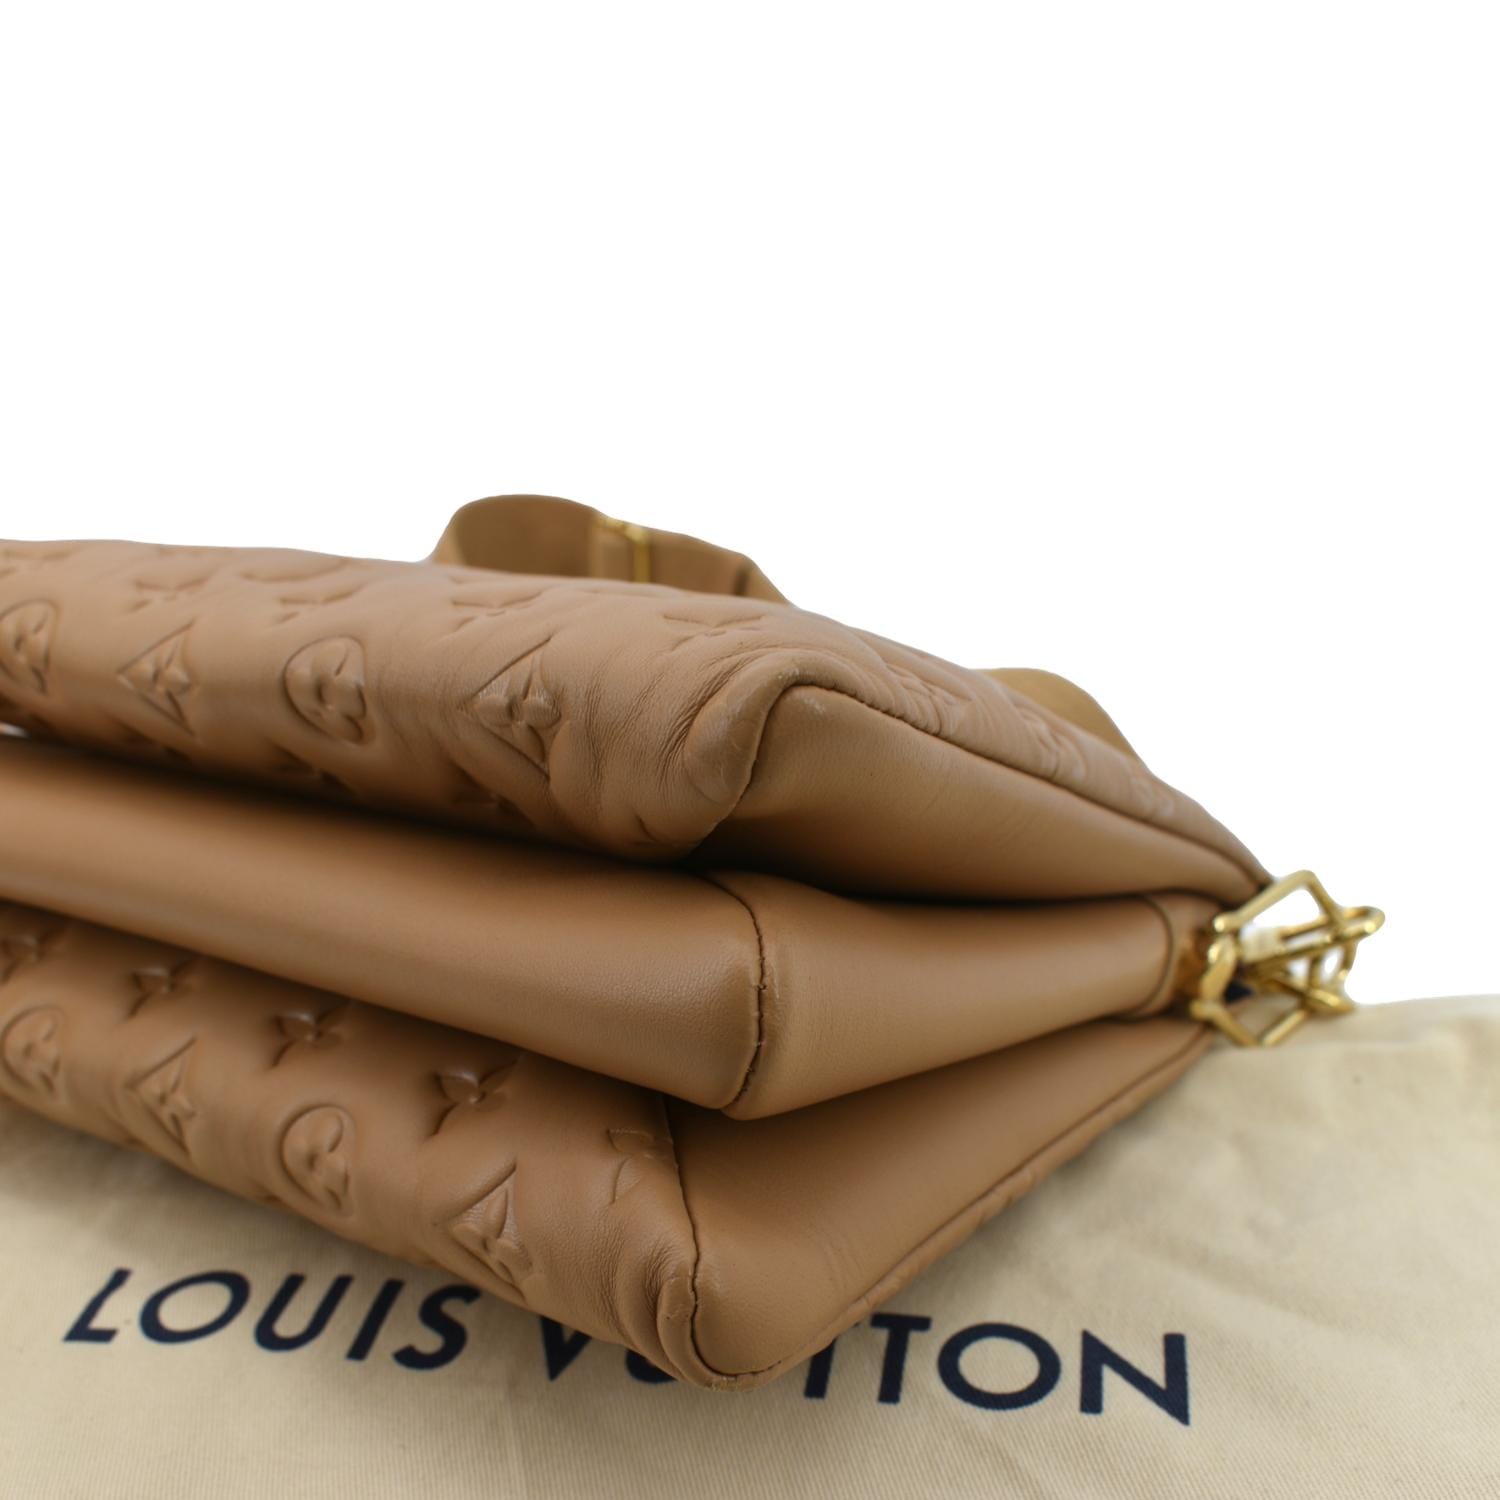 LOUIS VUITTON Coussin PM Monogram Embossed Shoulder Bag Camel - 15% OF